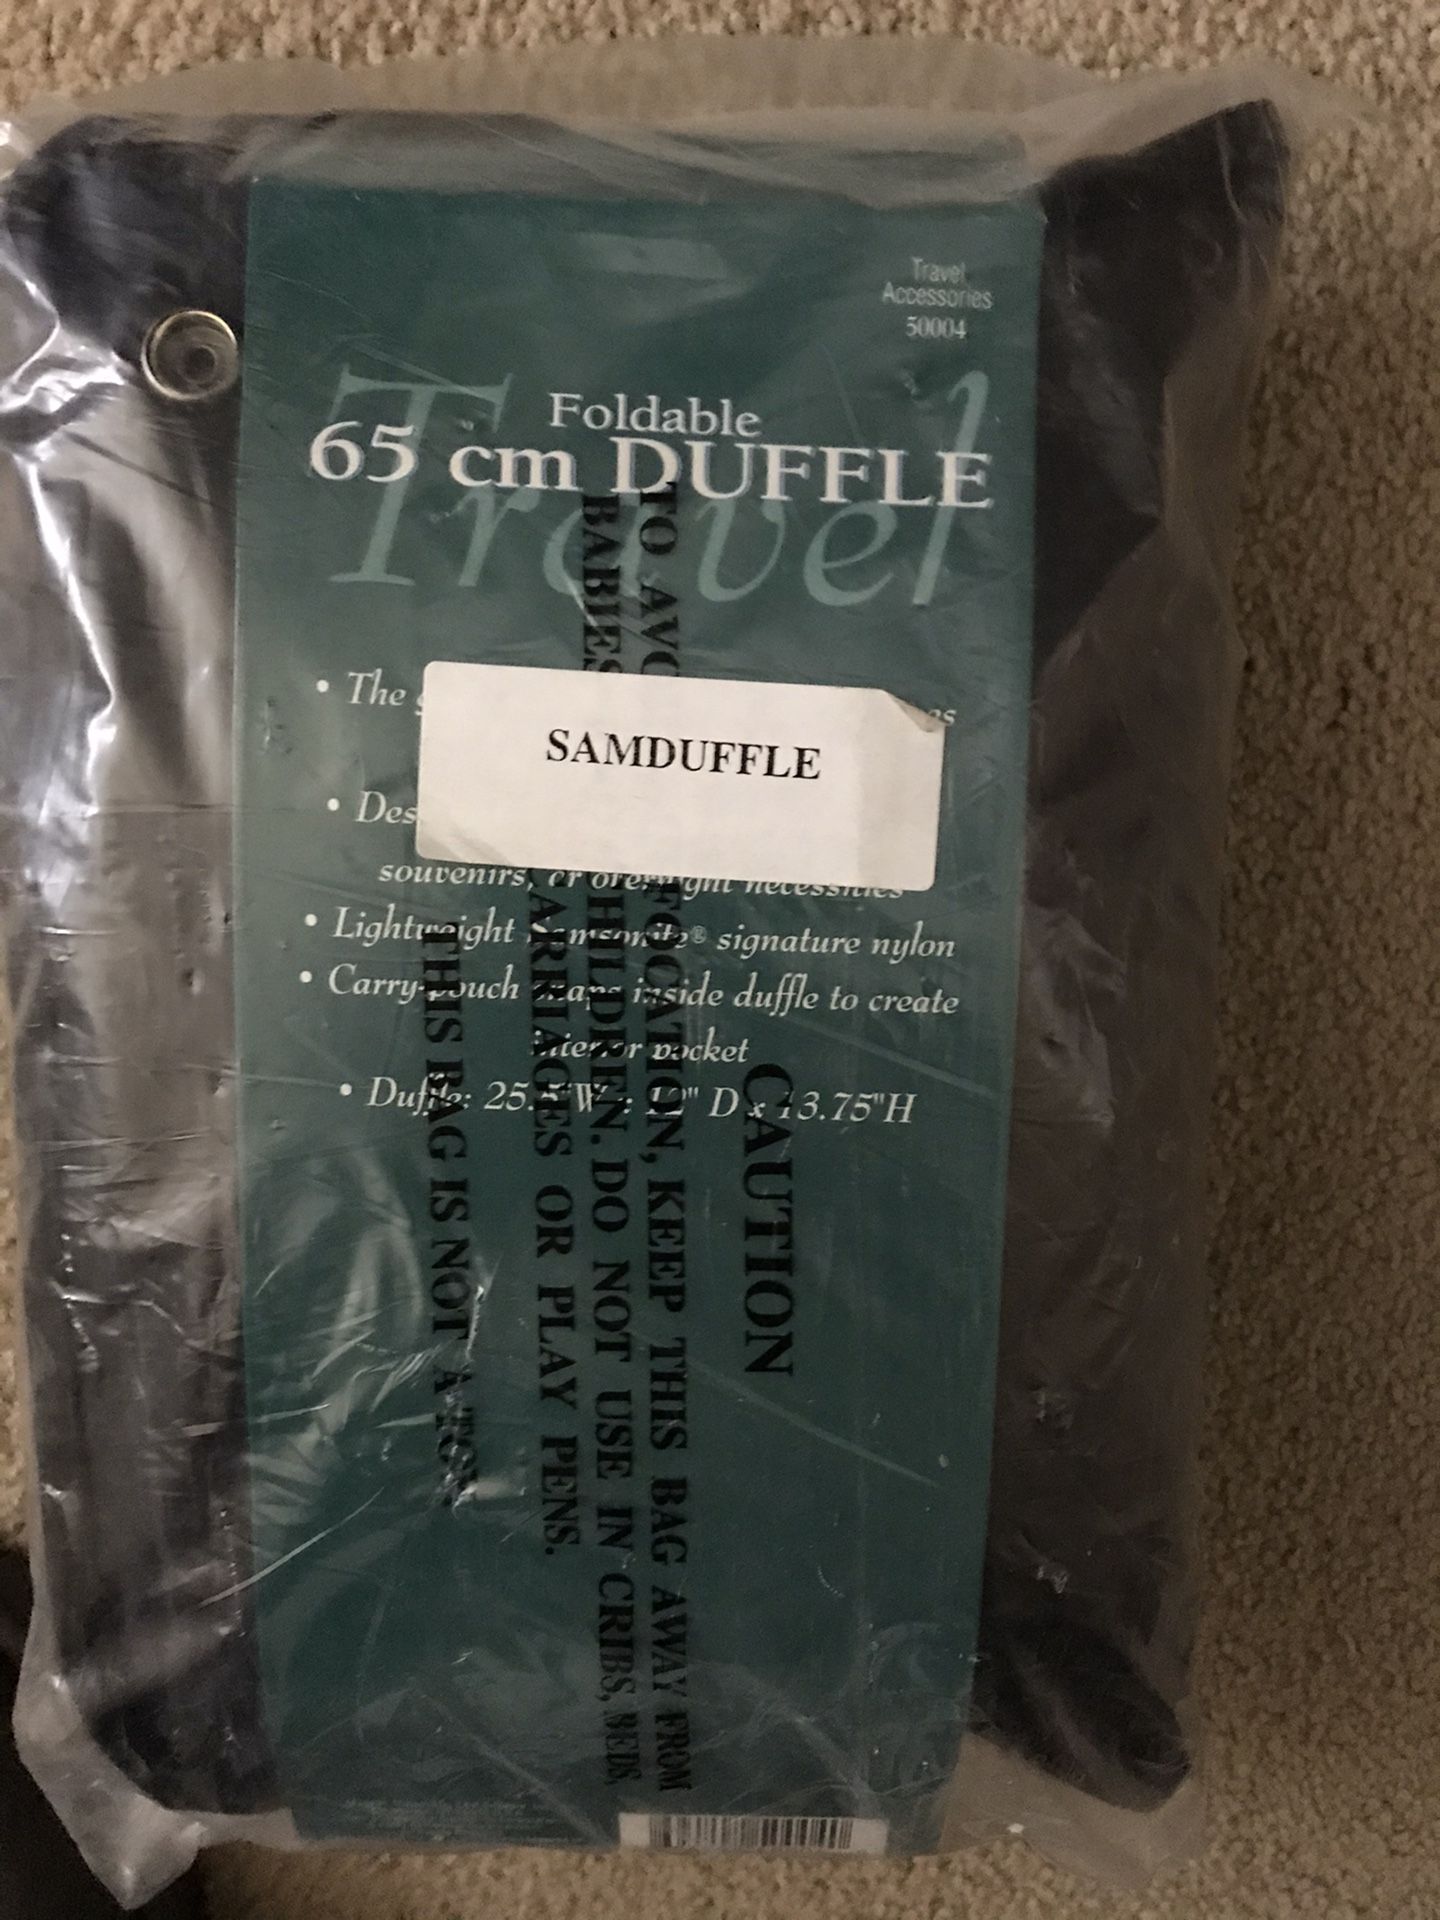 Foldable travel duffle- Original Packaging